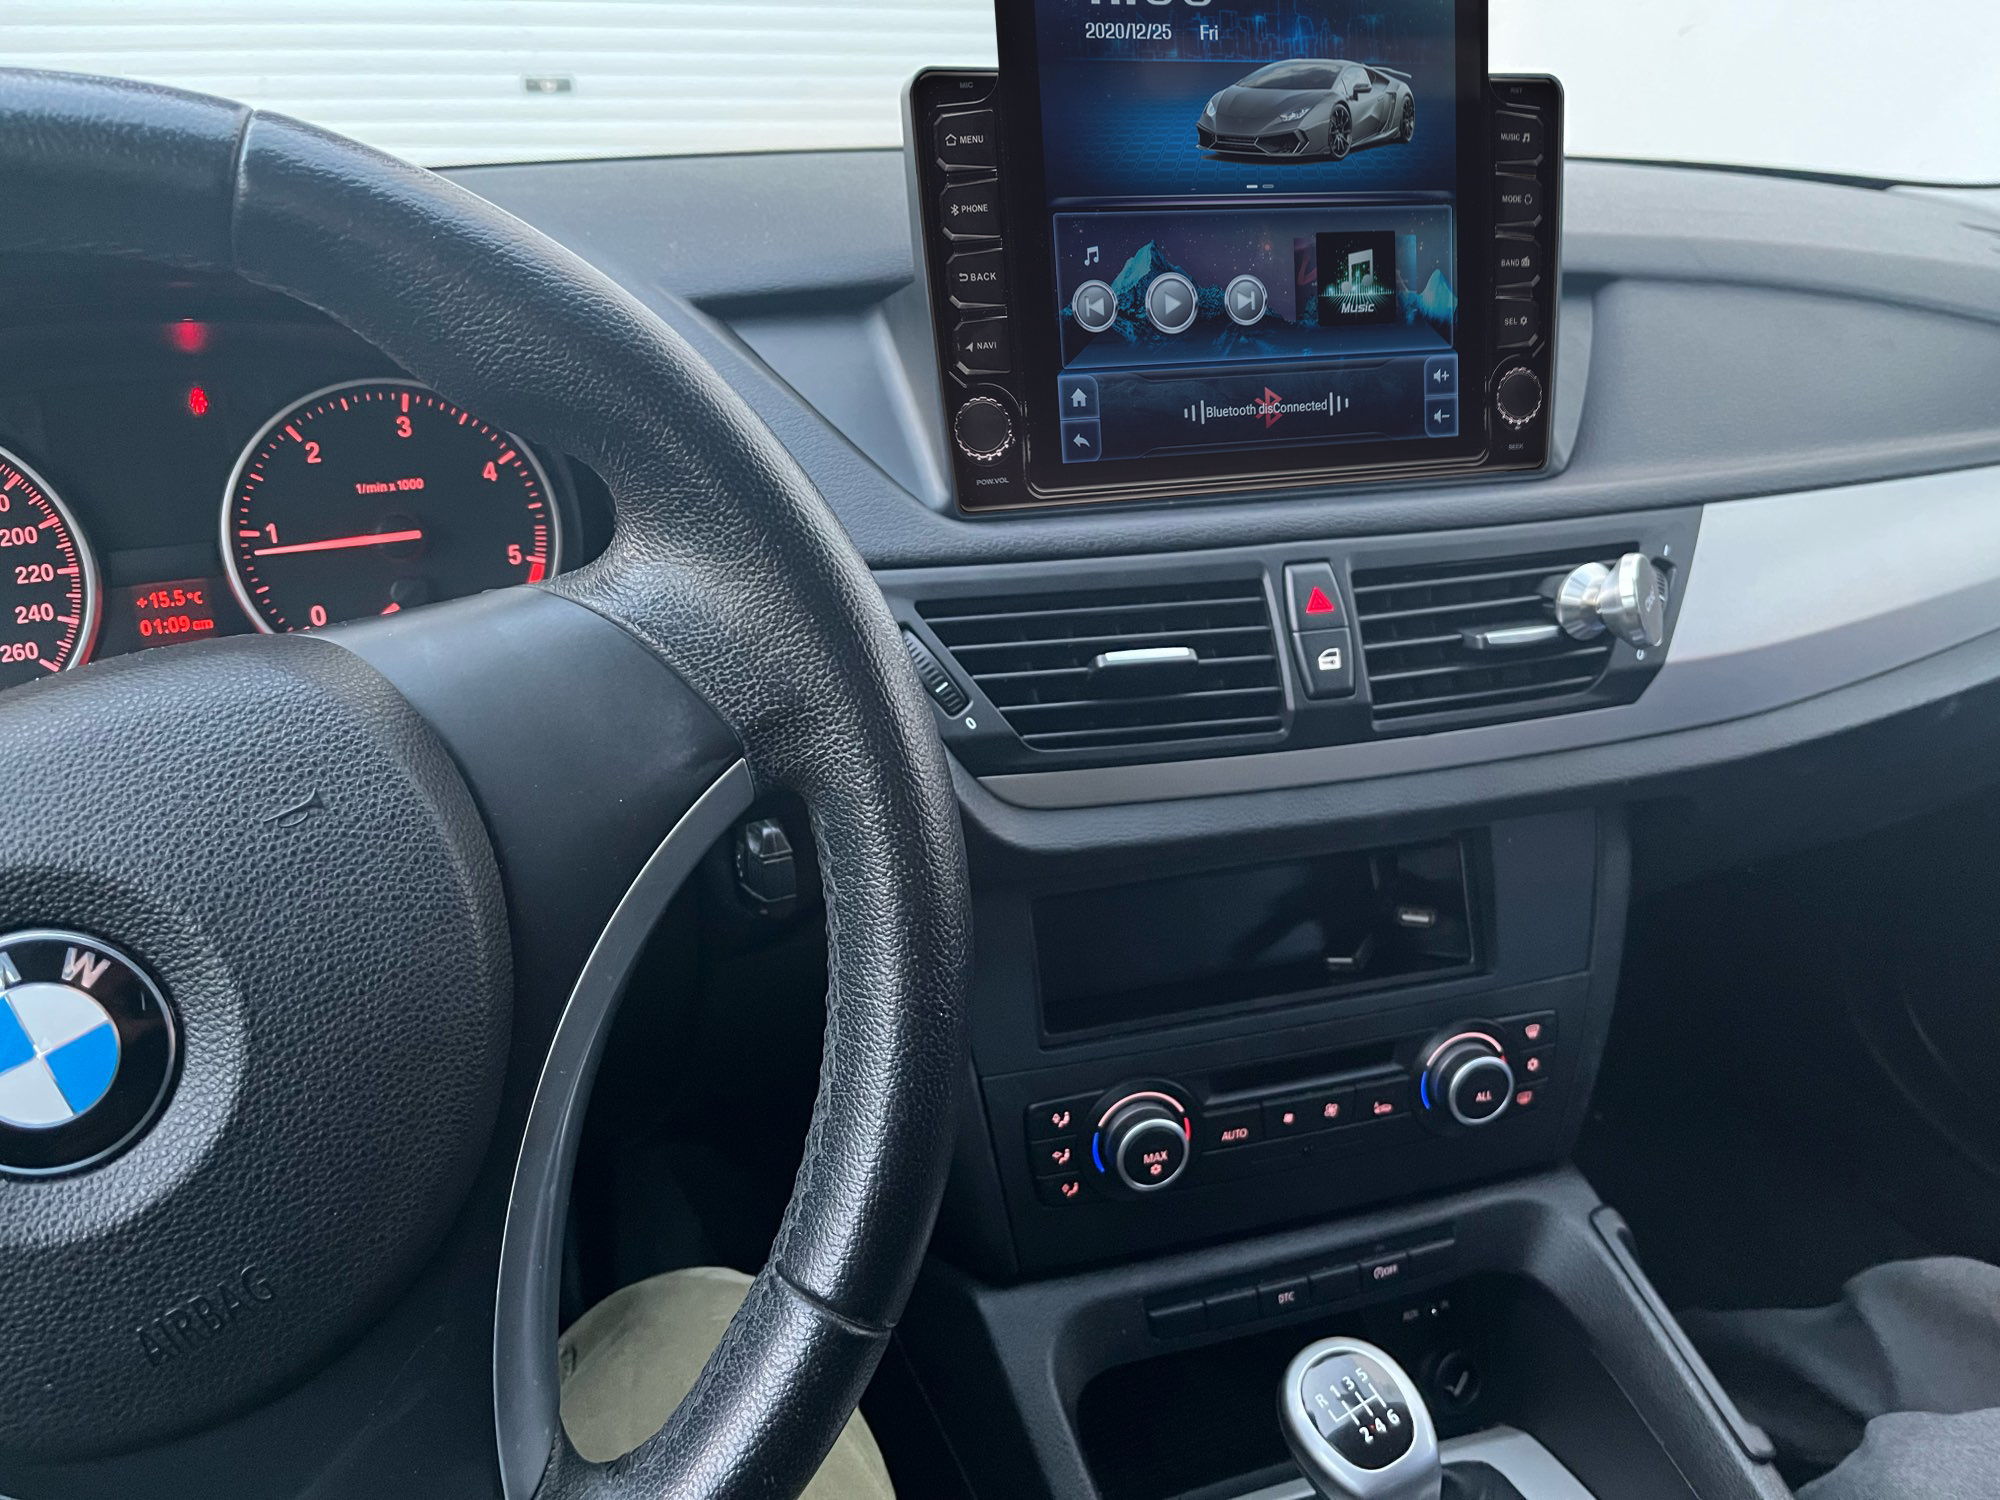 Navigatie AUTONAV Android GPS Dedicata BMW X1 E84, Model XPERT Memorie 32GB Stocare, 2GB DDR3 RAM, Display Vertical Stil Tesla 10" Full-Touch, WiFi, 2 x USB, Bluetooth, Quad-Core 4 * 1.3GHz, 4 * 50W Audio